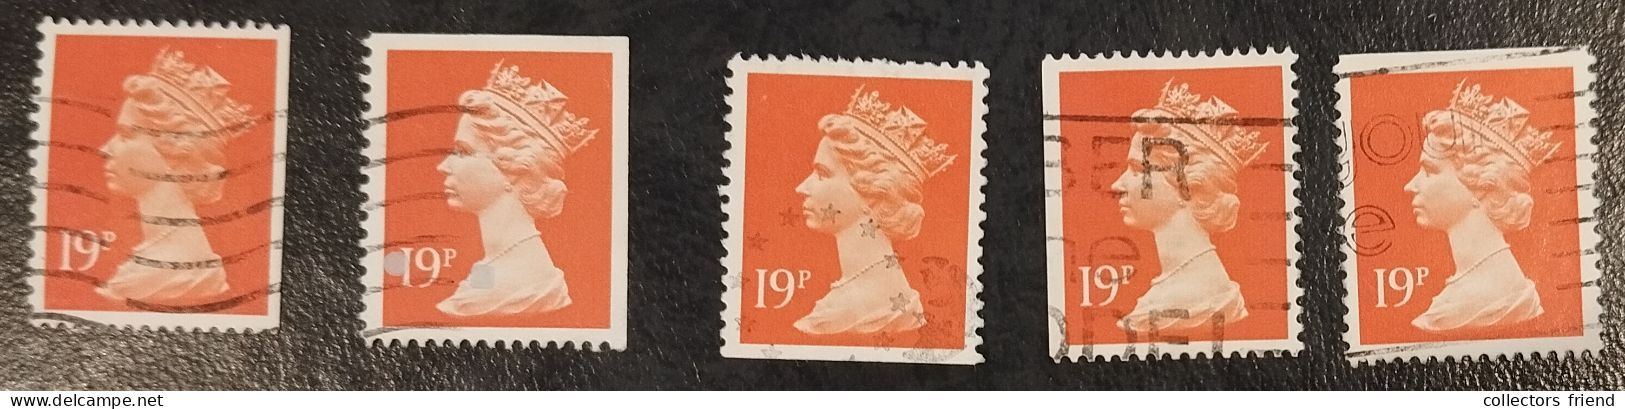 Grande Bretagne - Great Britain - Großbritannien - Elizabeth II - 19p -  Collection Of Imp. Variations - Used - Machins